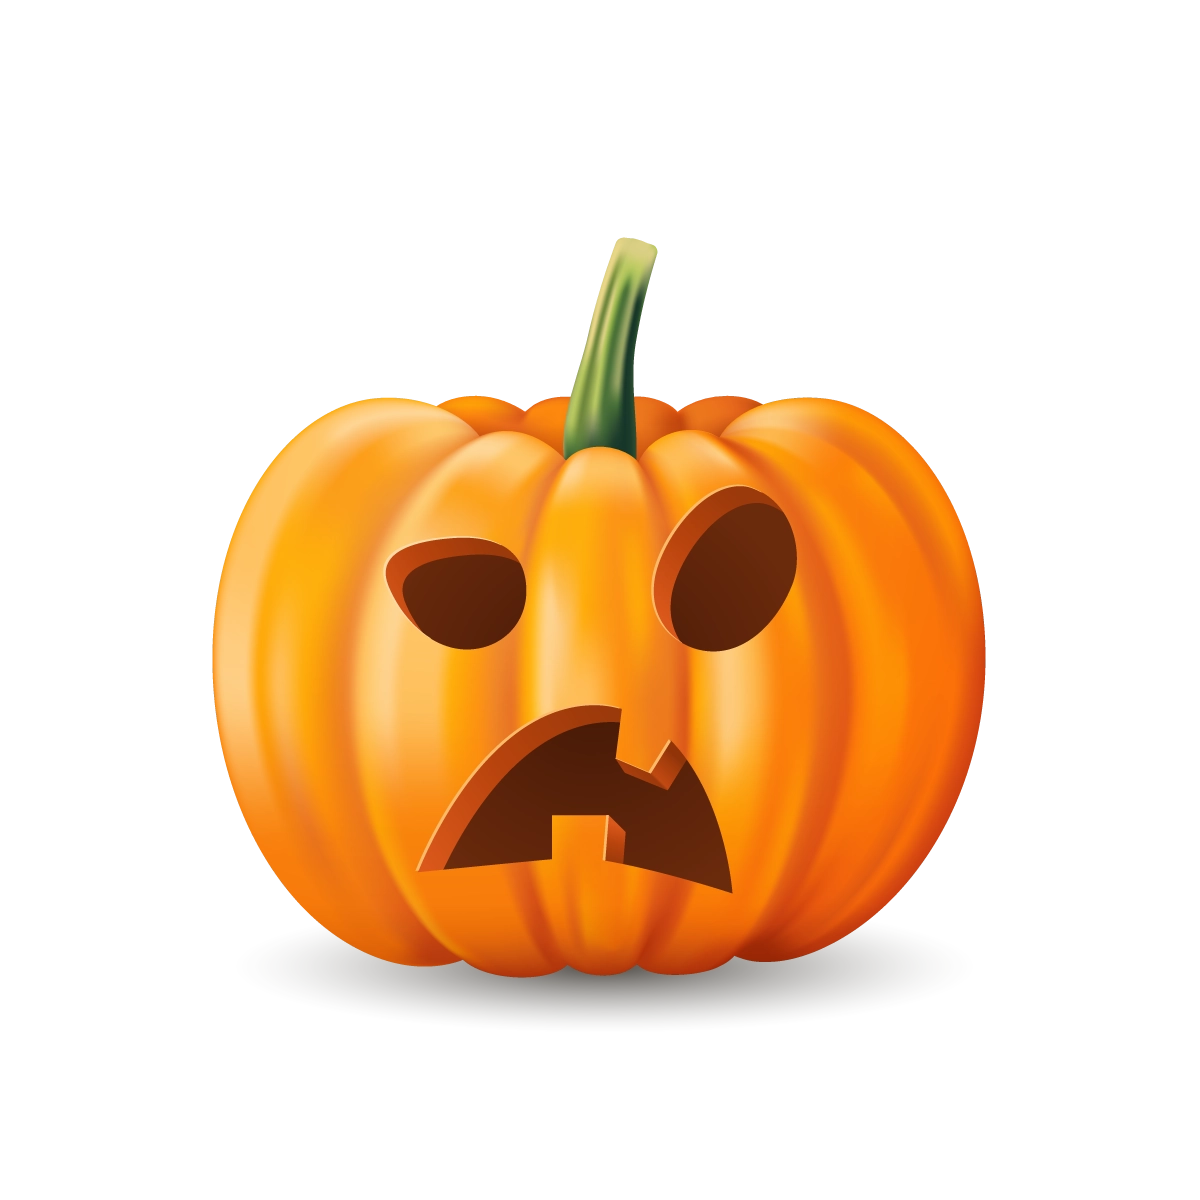 pumpkin normal state image